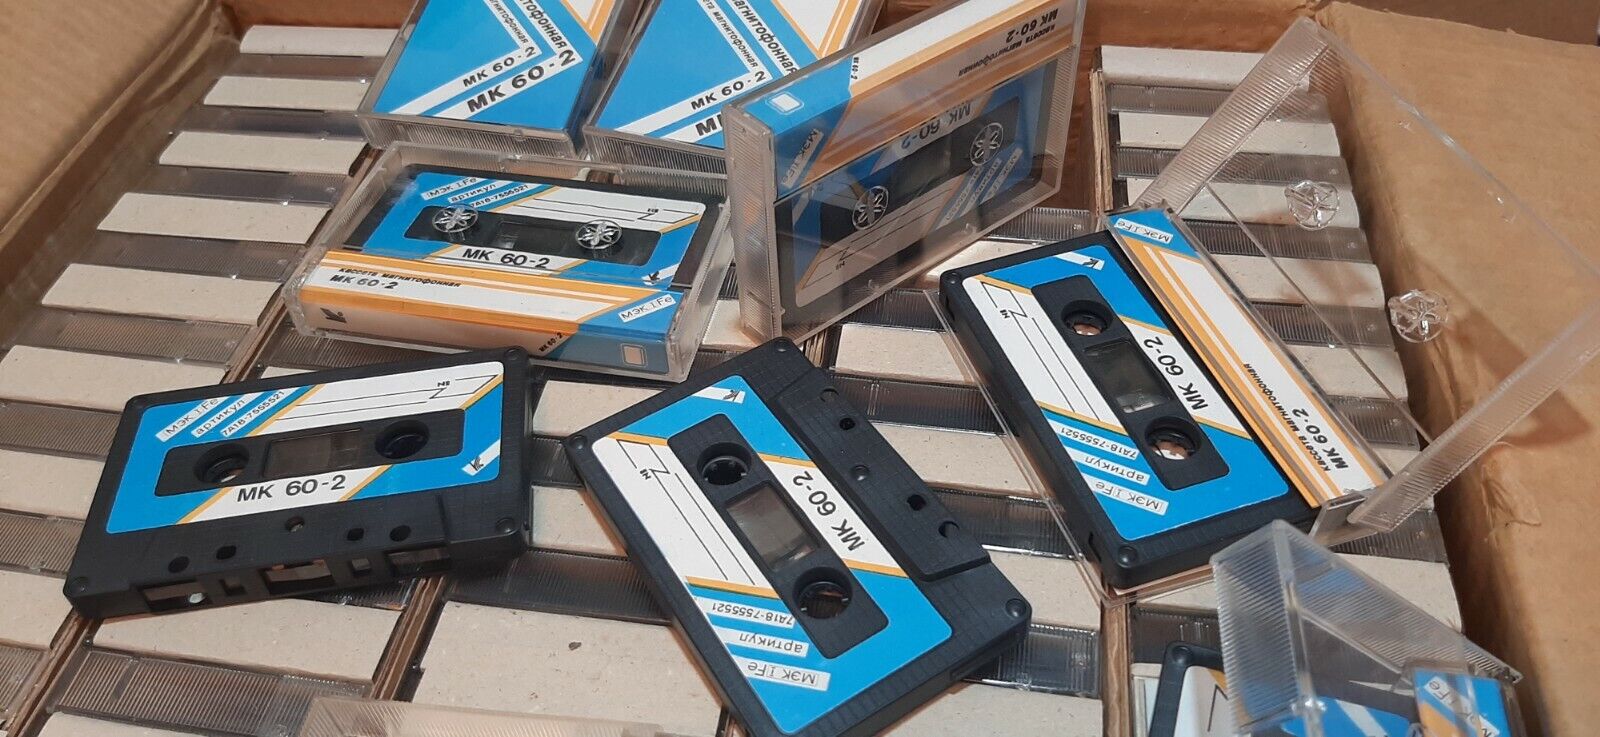 Soviet Vintage Audio cassettes MK 60-2/NEW/USSR.RARE.(1989year)/(10 pieces lot).